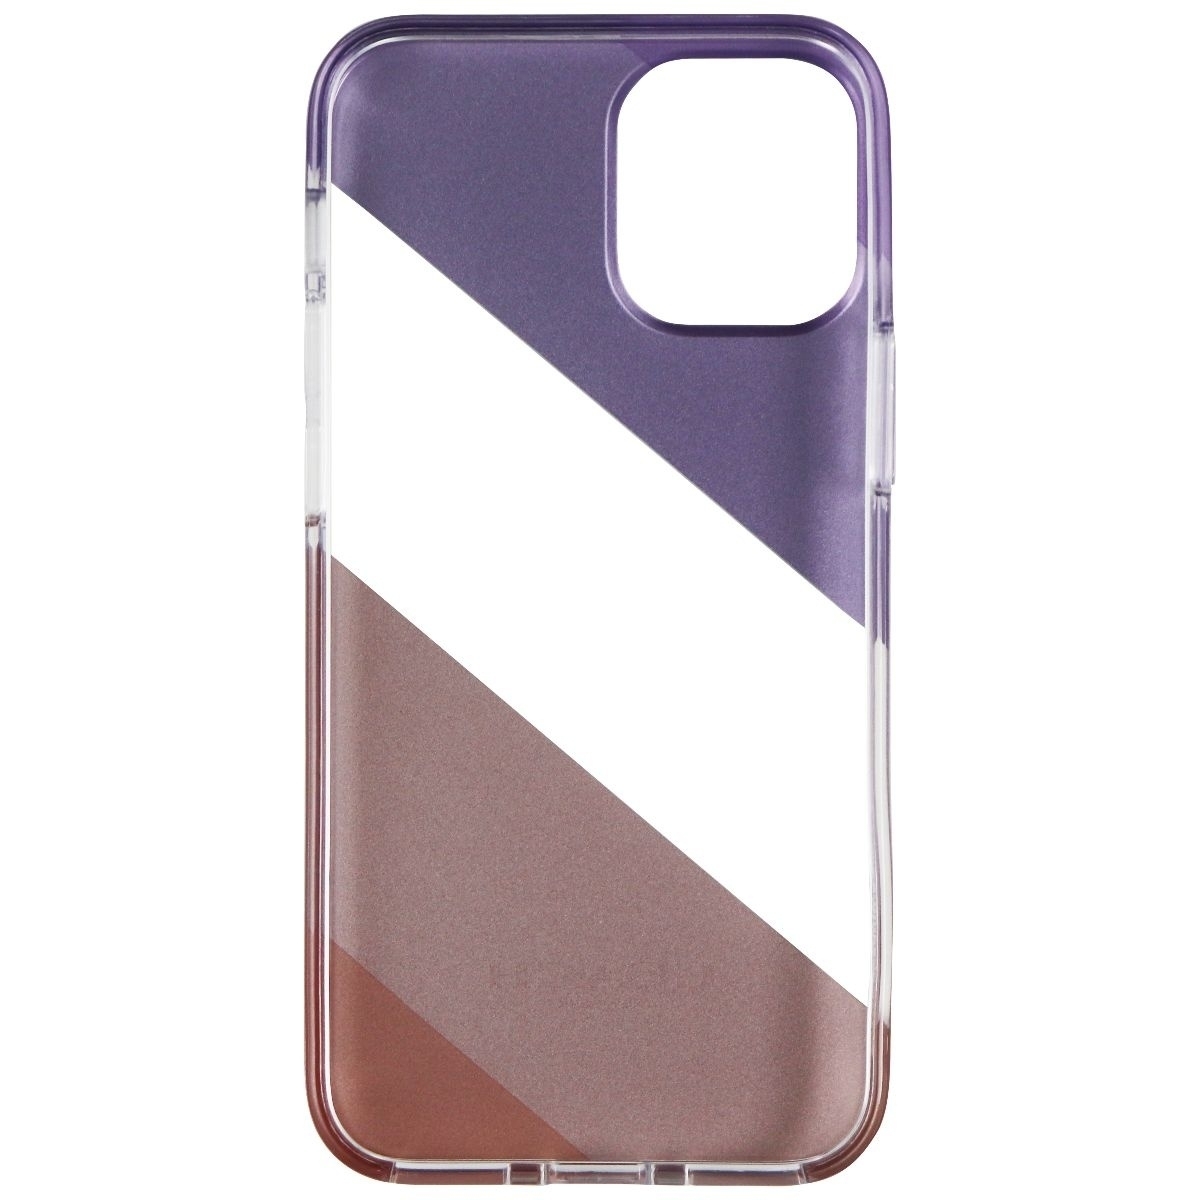 Coach Protective Case For IPhone 12 Mini - Diagonal Stripe Metallic Pink/Purple